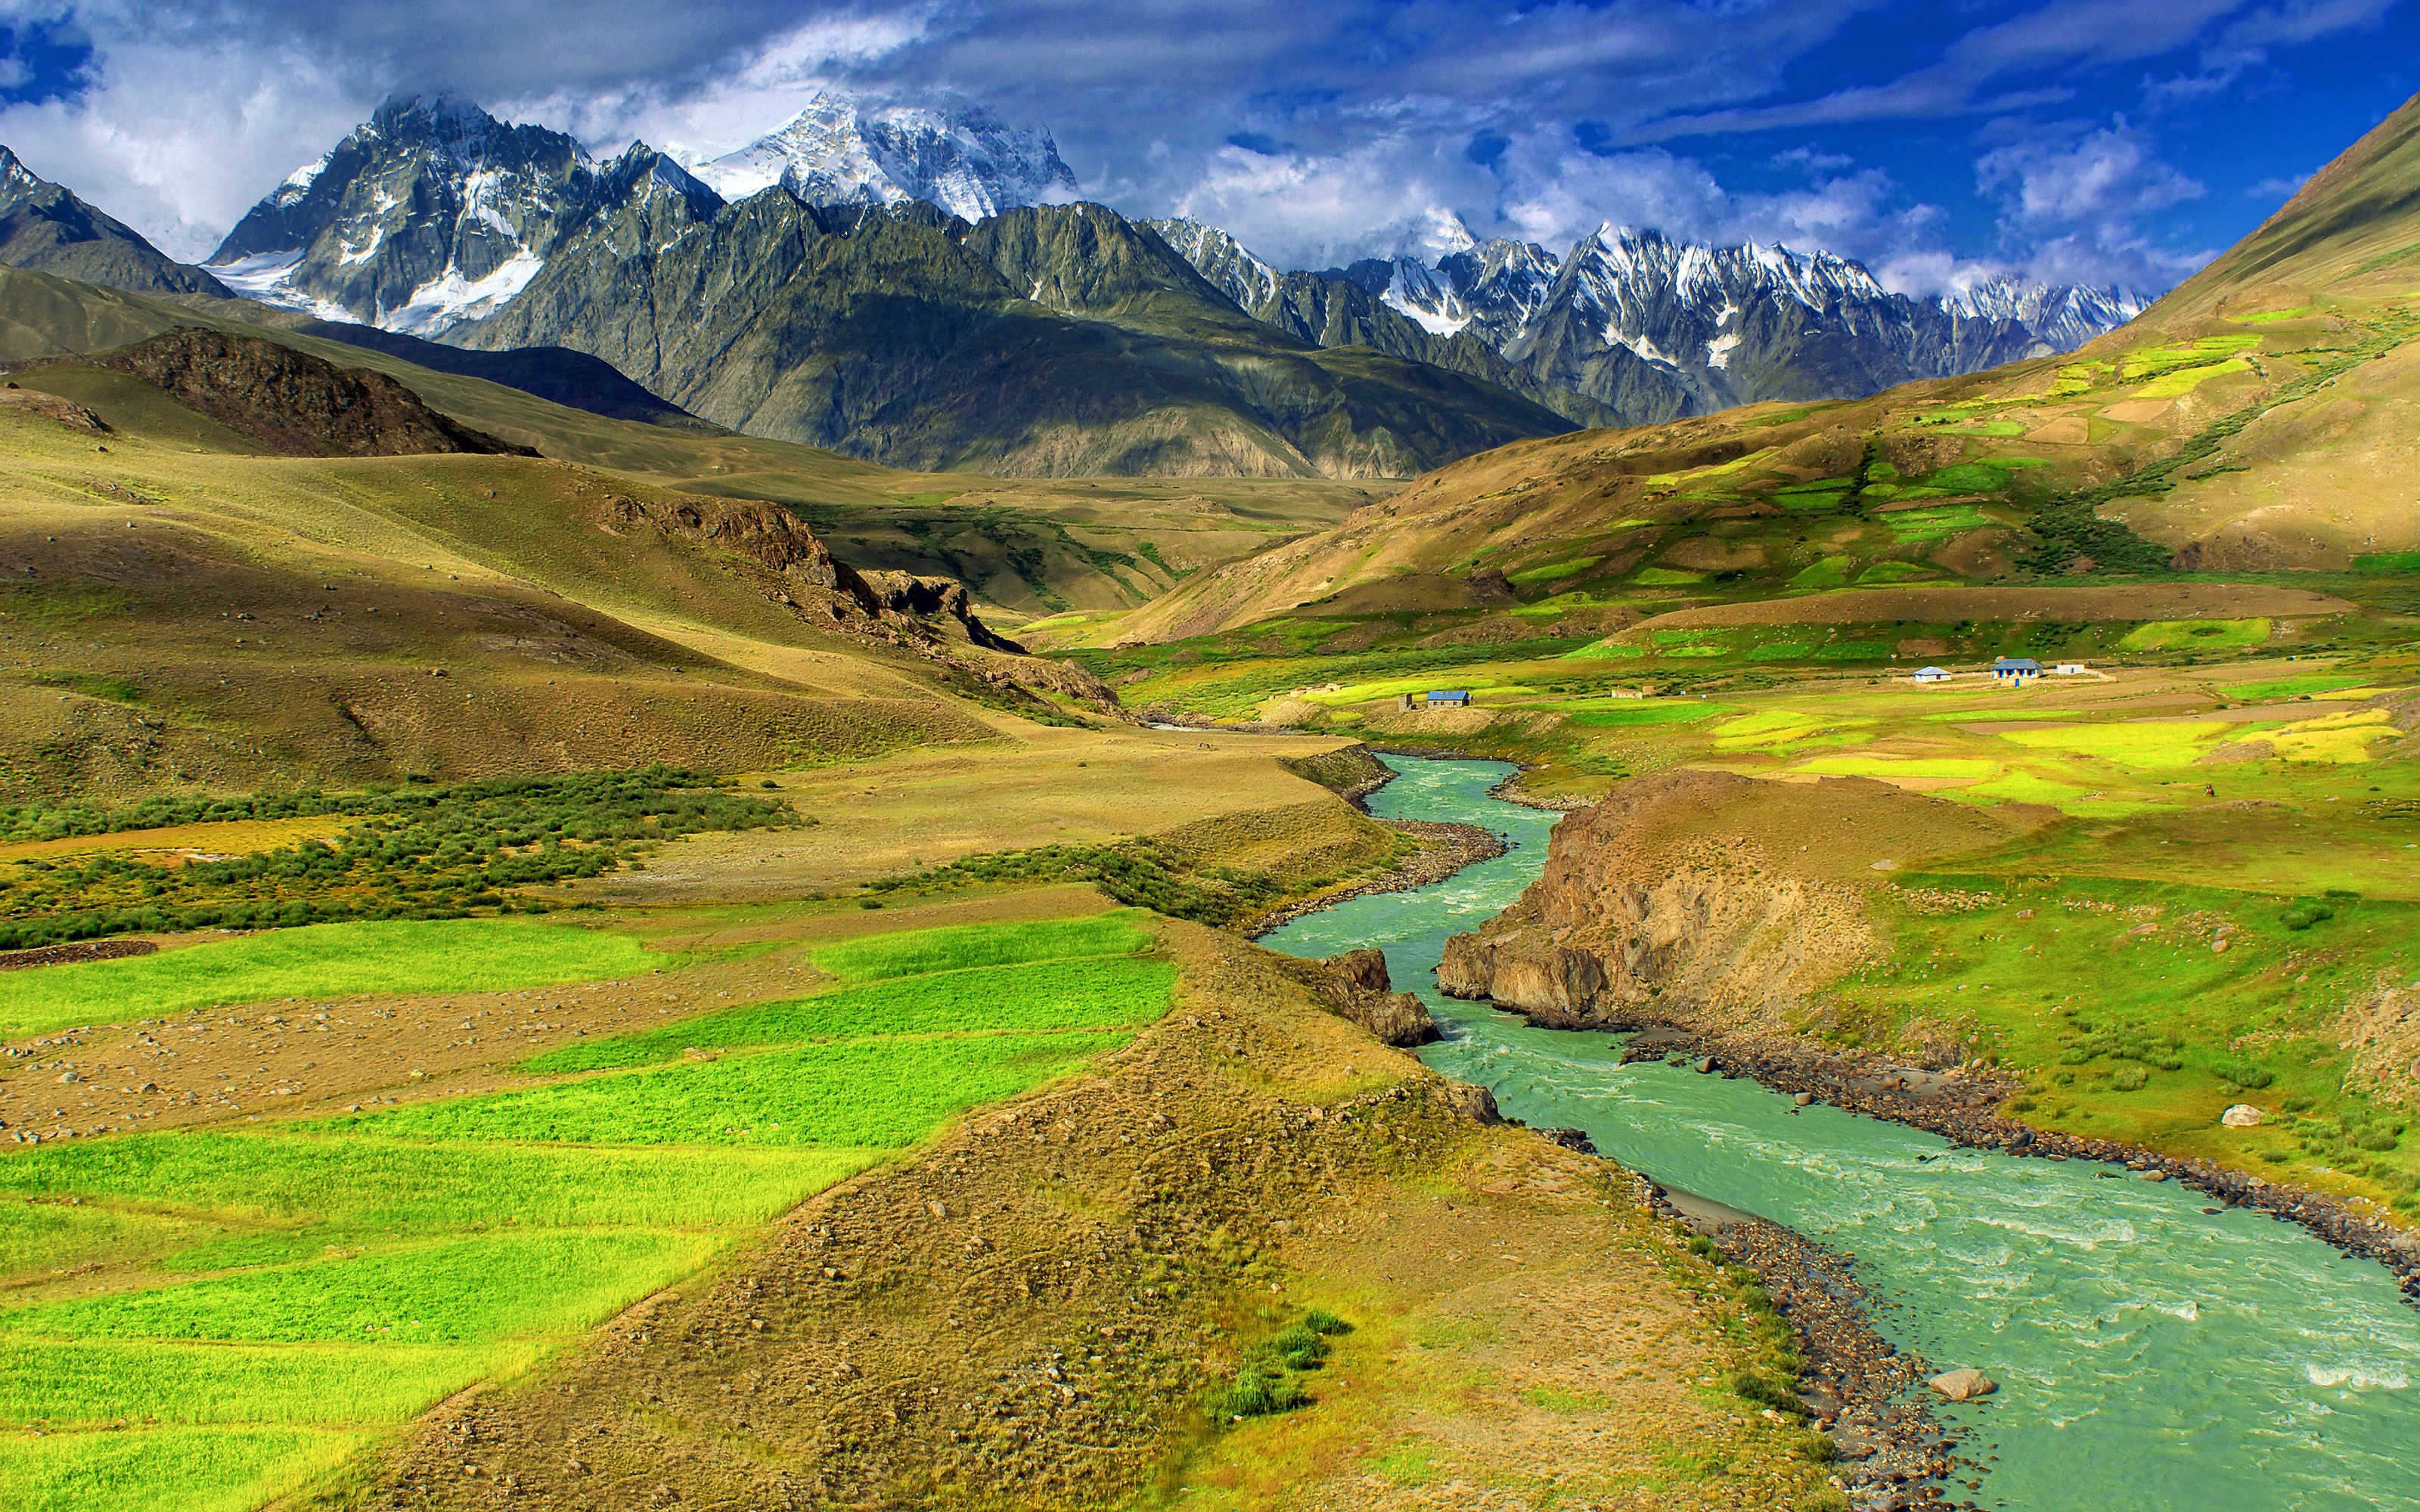 General 3200x2000 landscape Mongolia mountains nature river